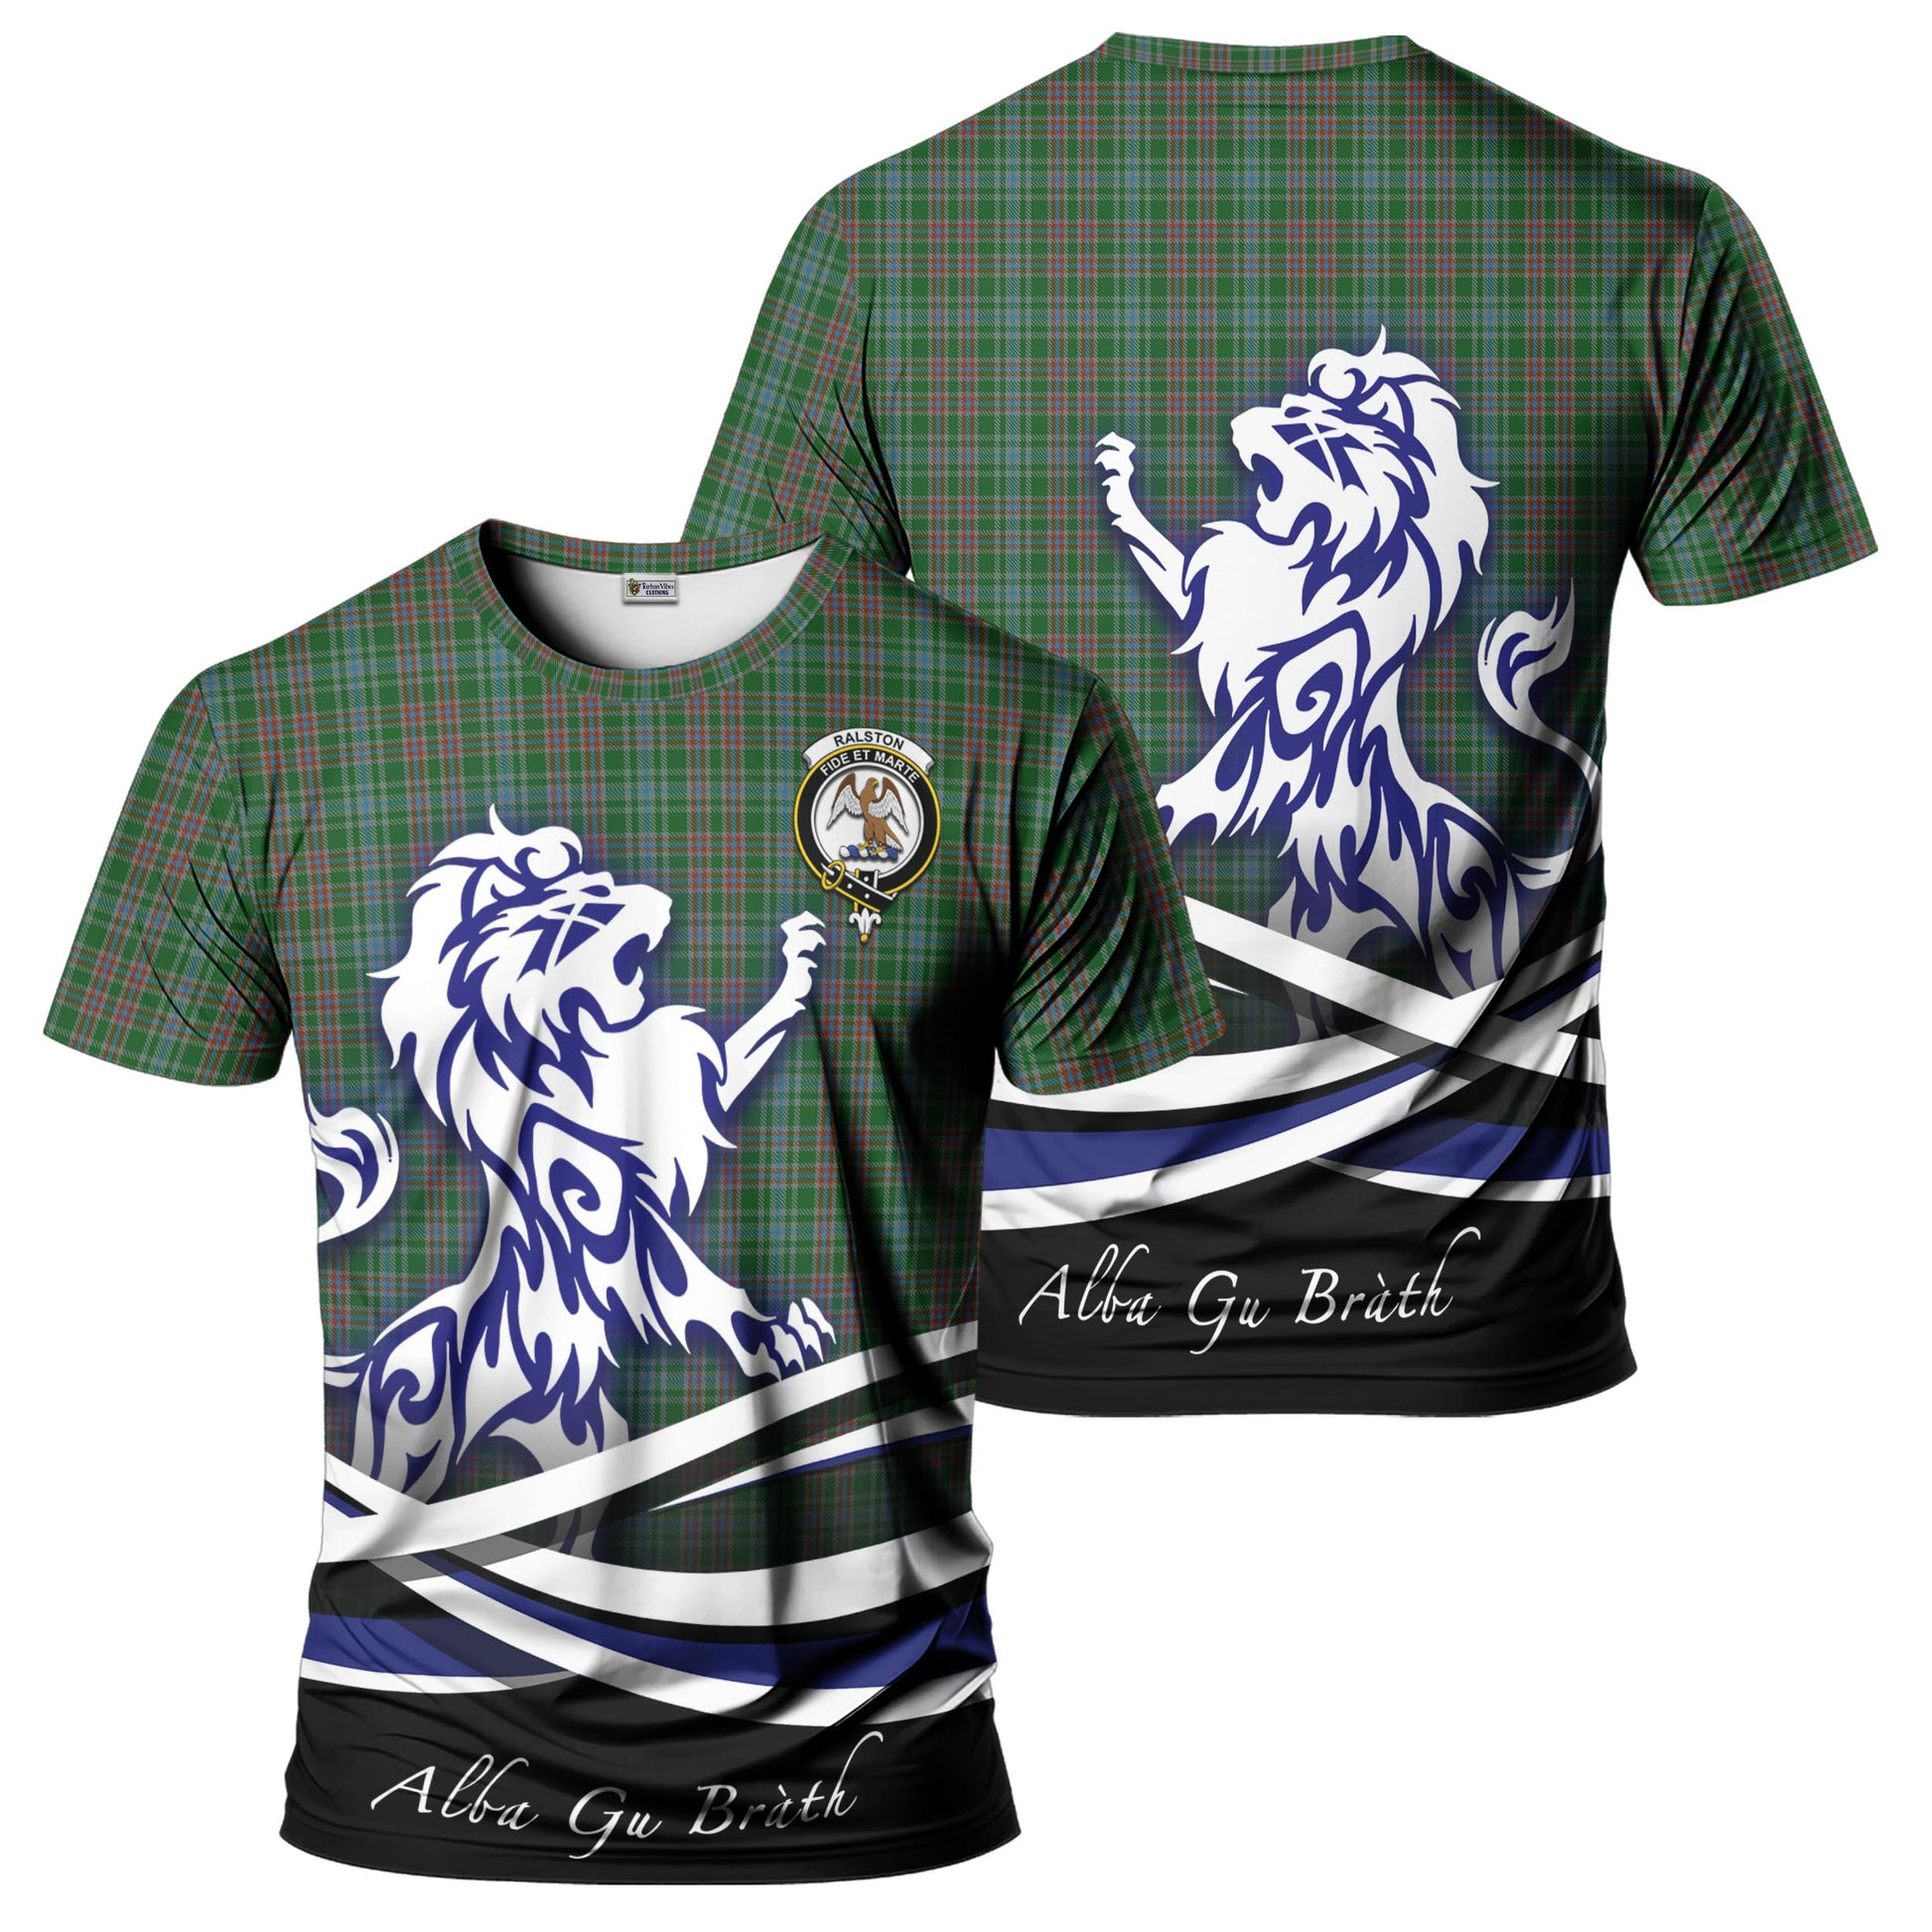 ralston-usa-tartan-t-shirt-with-alba-gu-brath-regal-lion-emblem